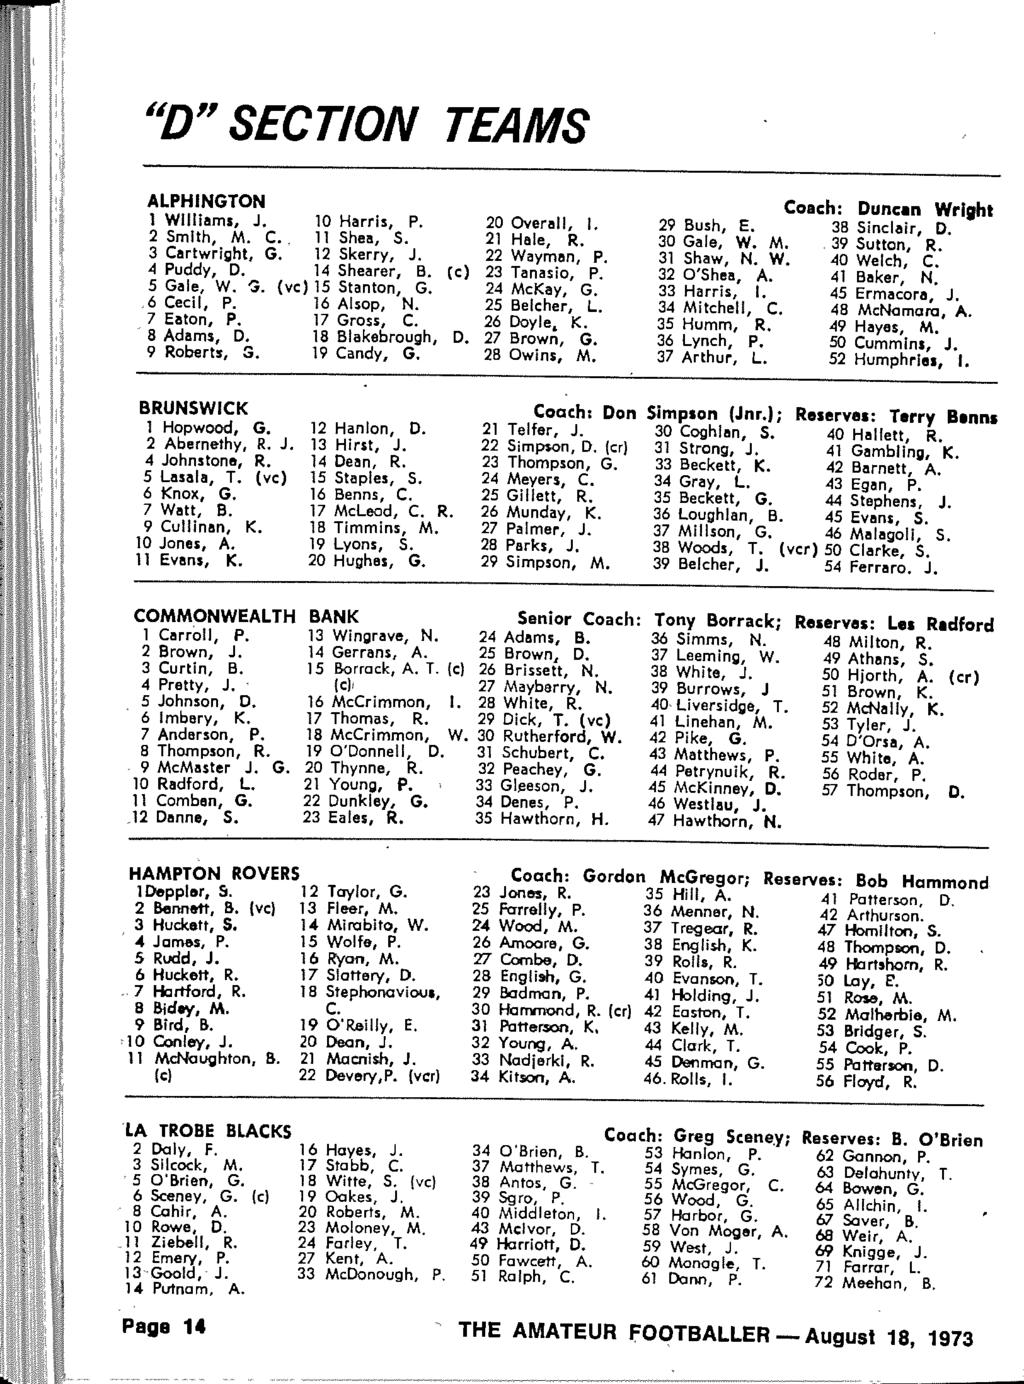 "D" SECTION TEAMS ALPHINGTON 1 Williams, J. 10 Harris, P. 20 Overall, I. 2 Smith, M. C., 11 Shea, S. 21 Hale, R. 3 Cartwright, G. 12 Skerry, J. 22 Wayman, P. 4 Puddy, D. 14 Shearer, B.